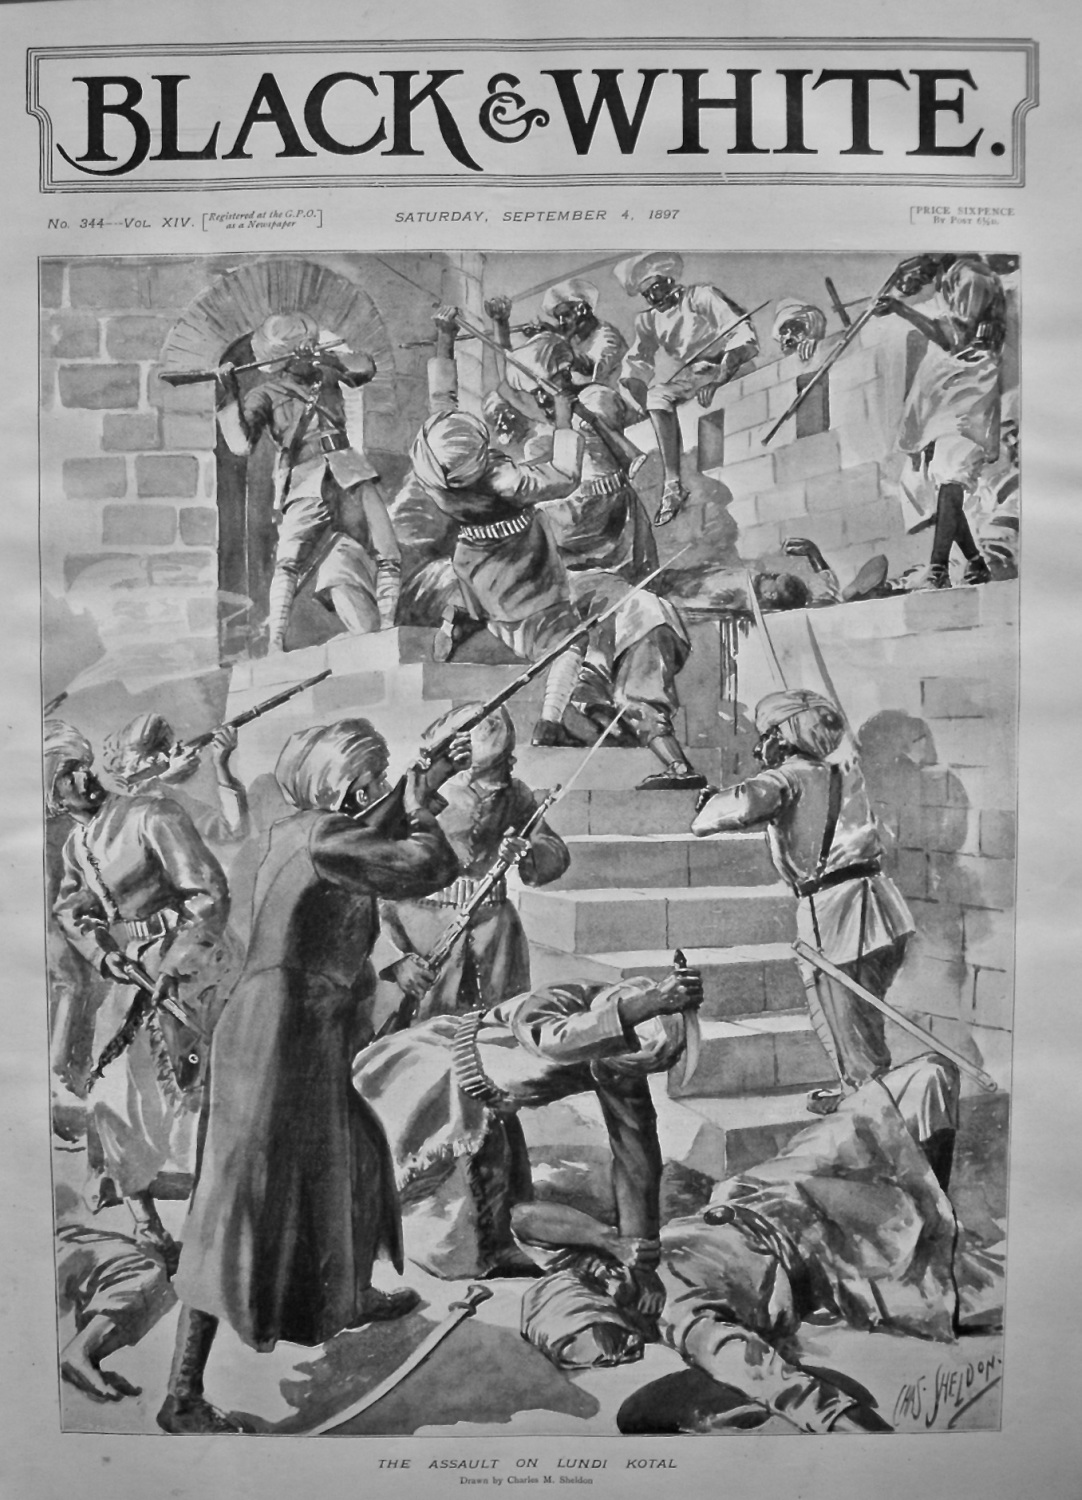 The Assault on Lundi Kotal. 1897.